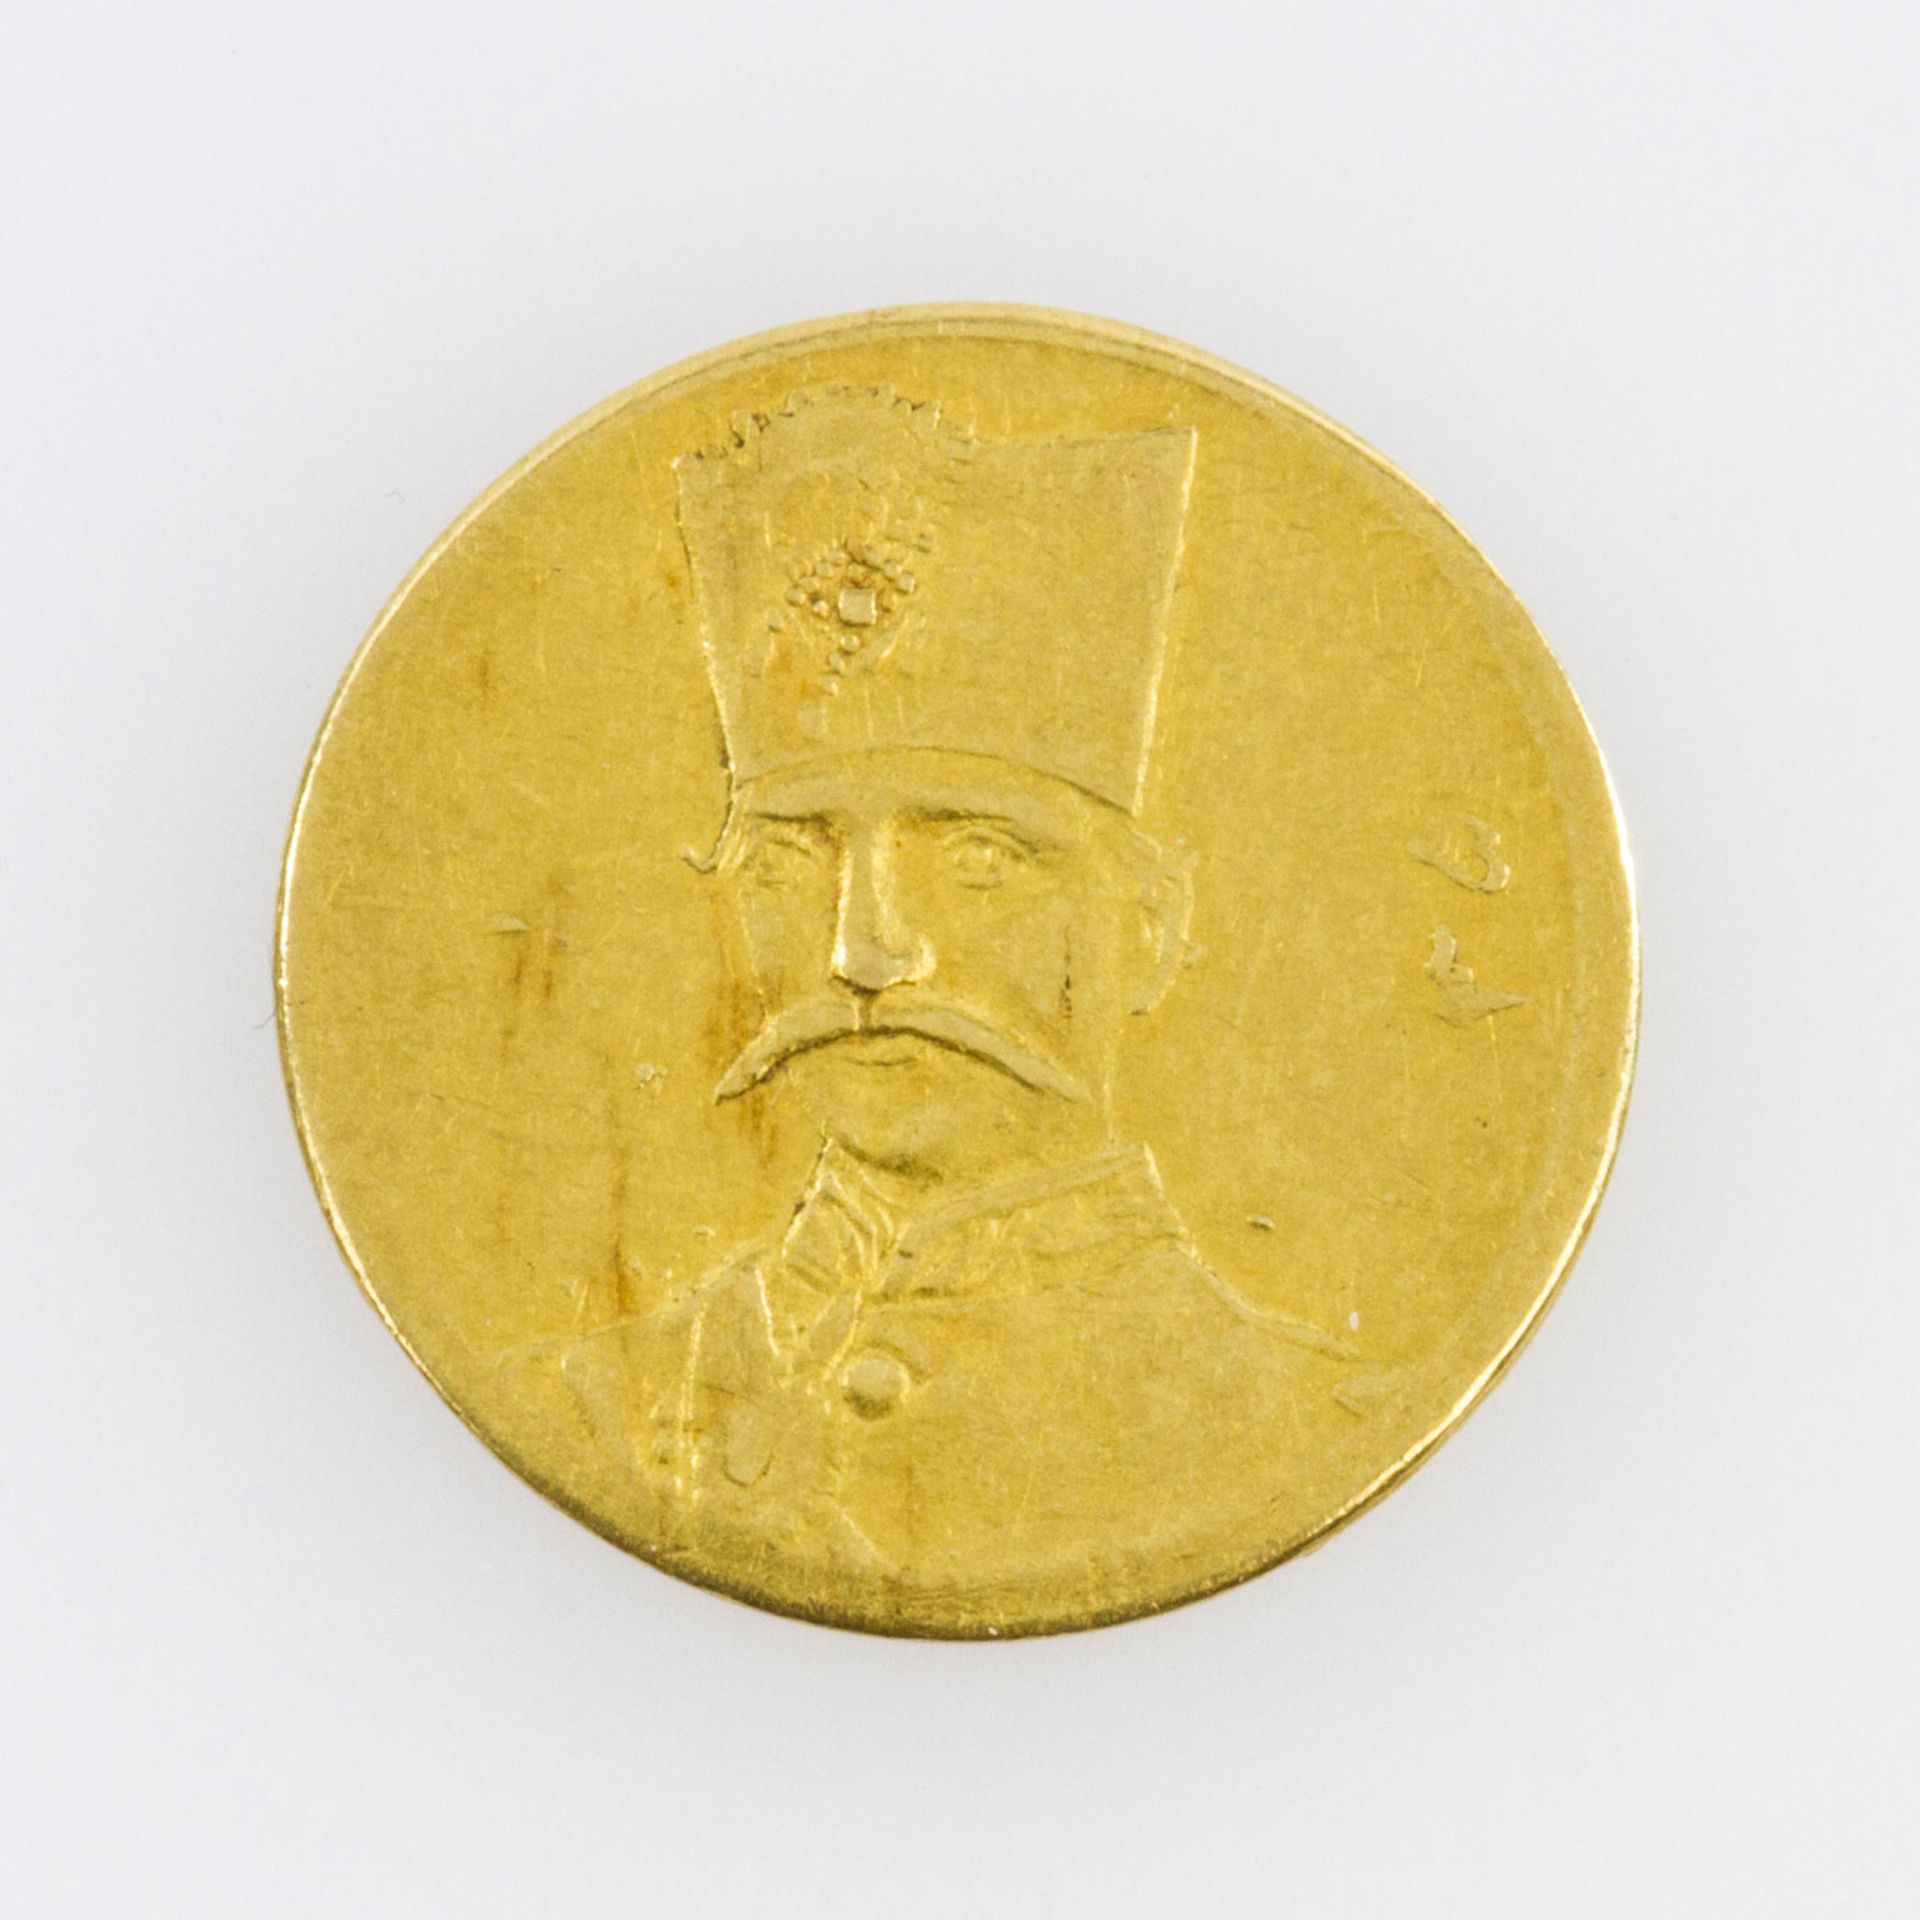 Iran/Gold - 1/2 Toman Jahr ?, Nasredin, ss., KM 927, 1,45g Gold rau.